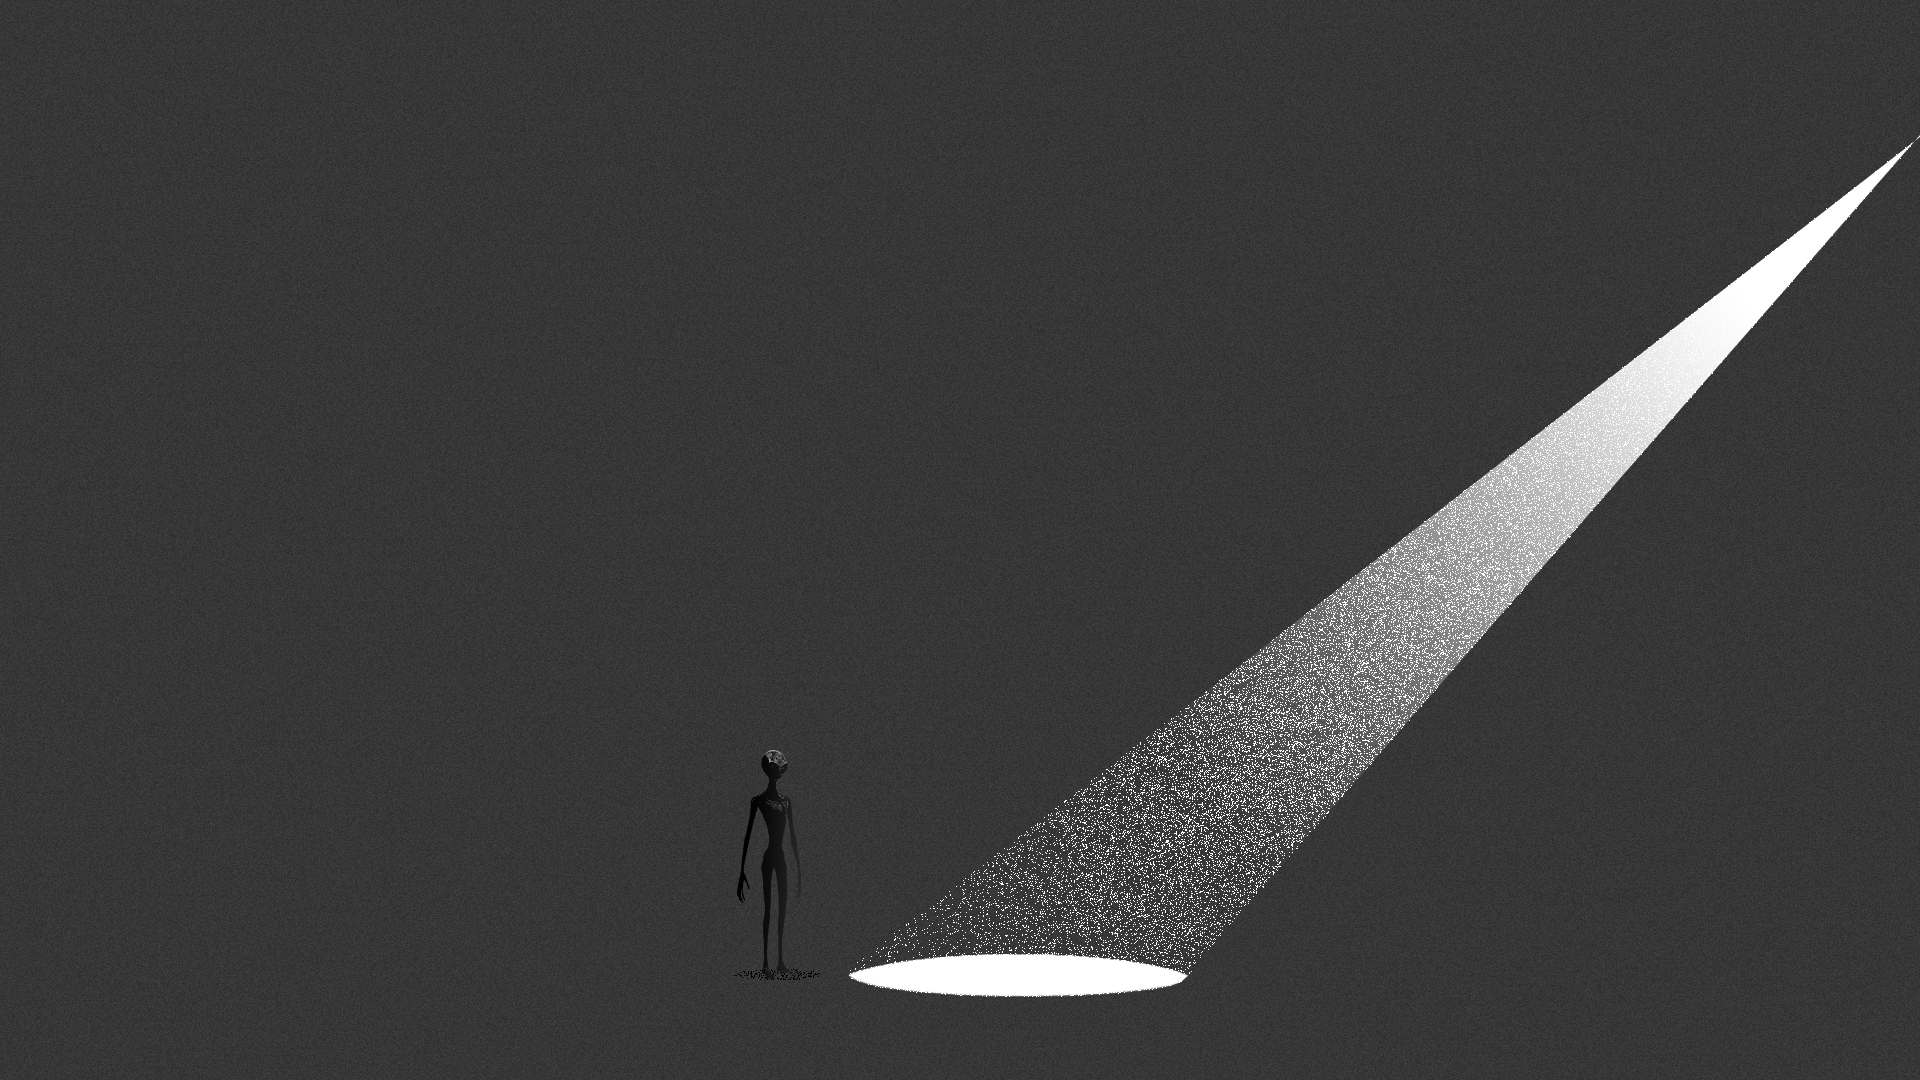 Illustration of an alien standing just outside a spotlight beam